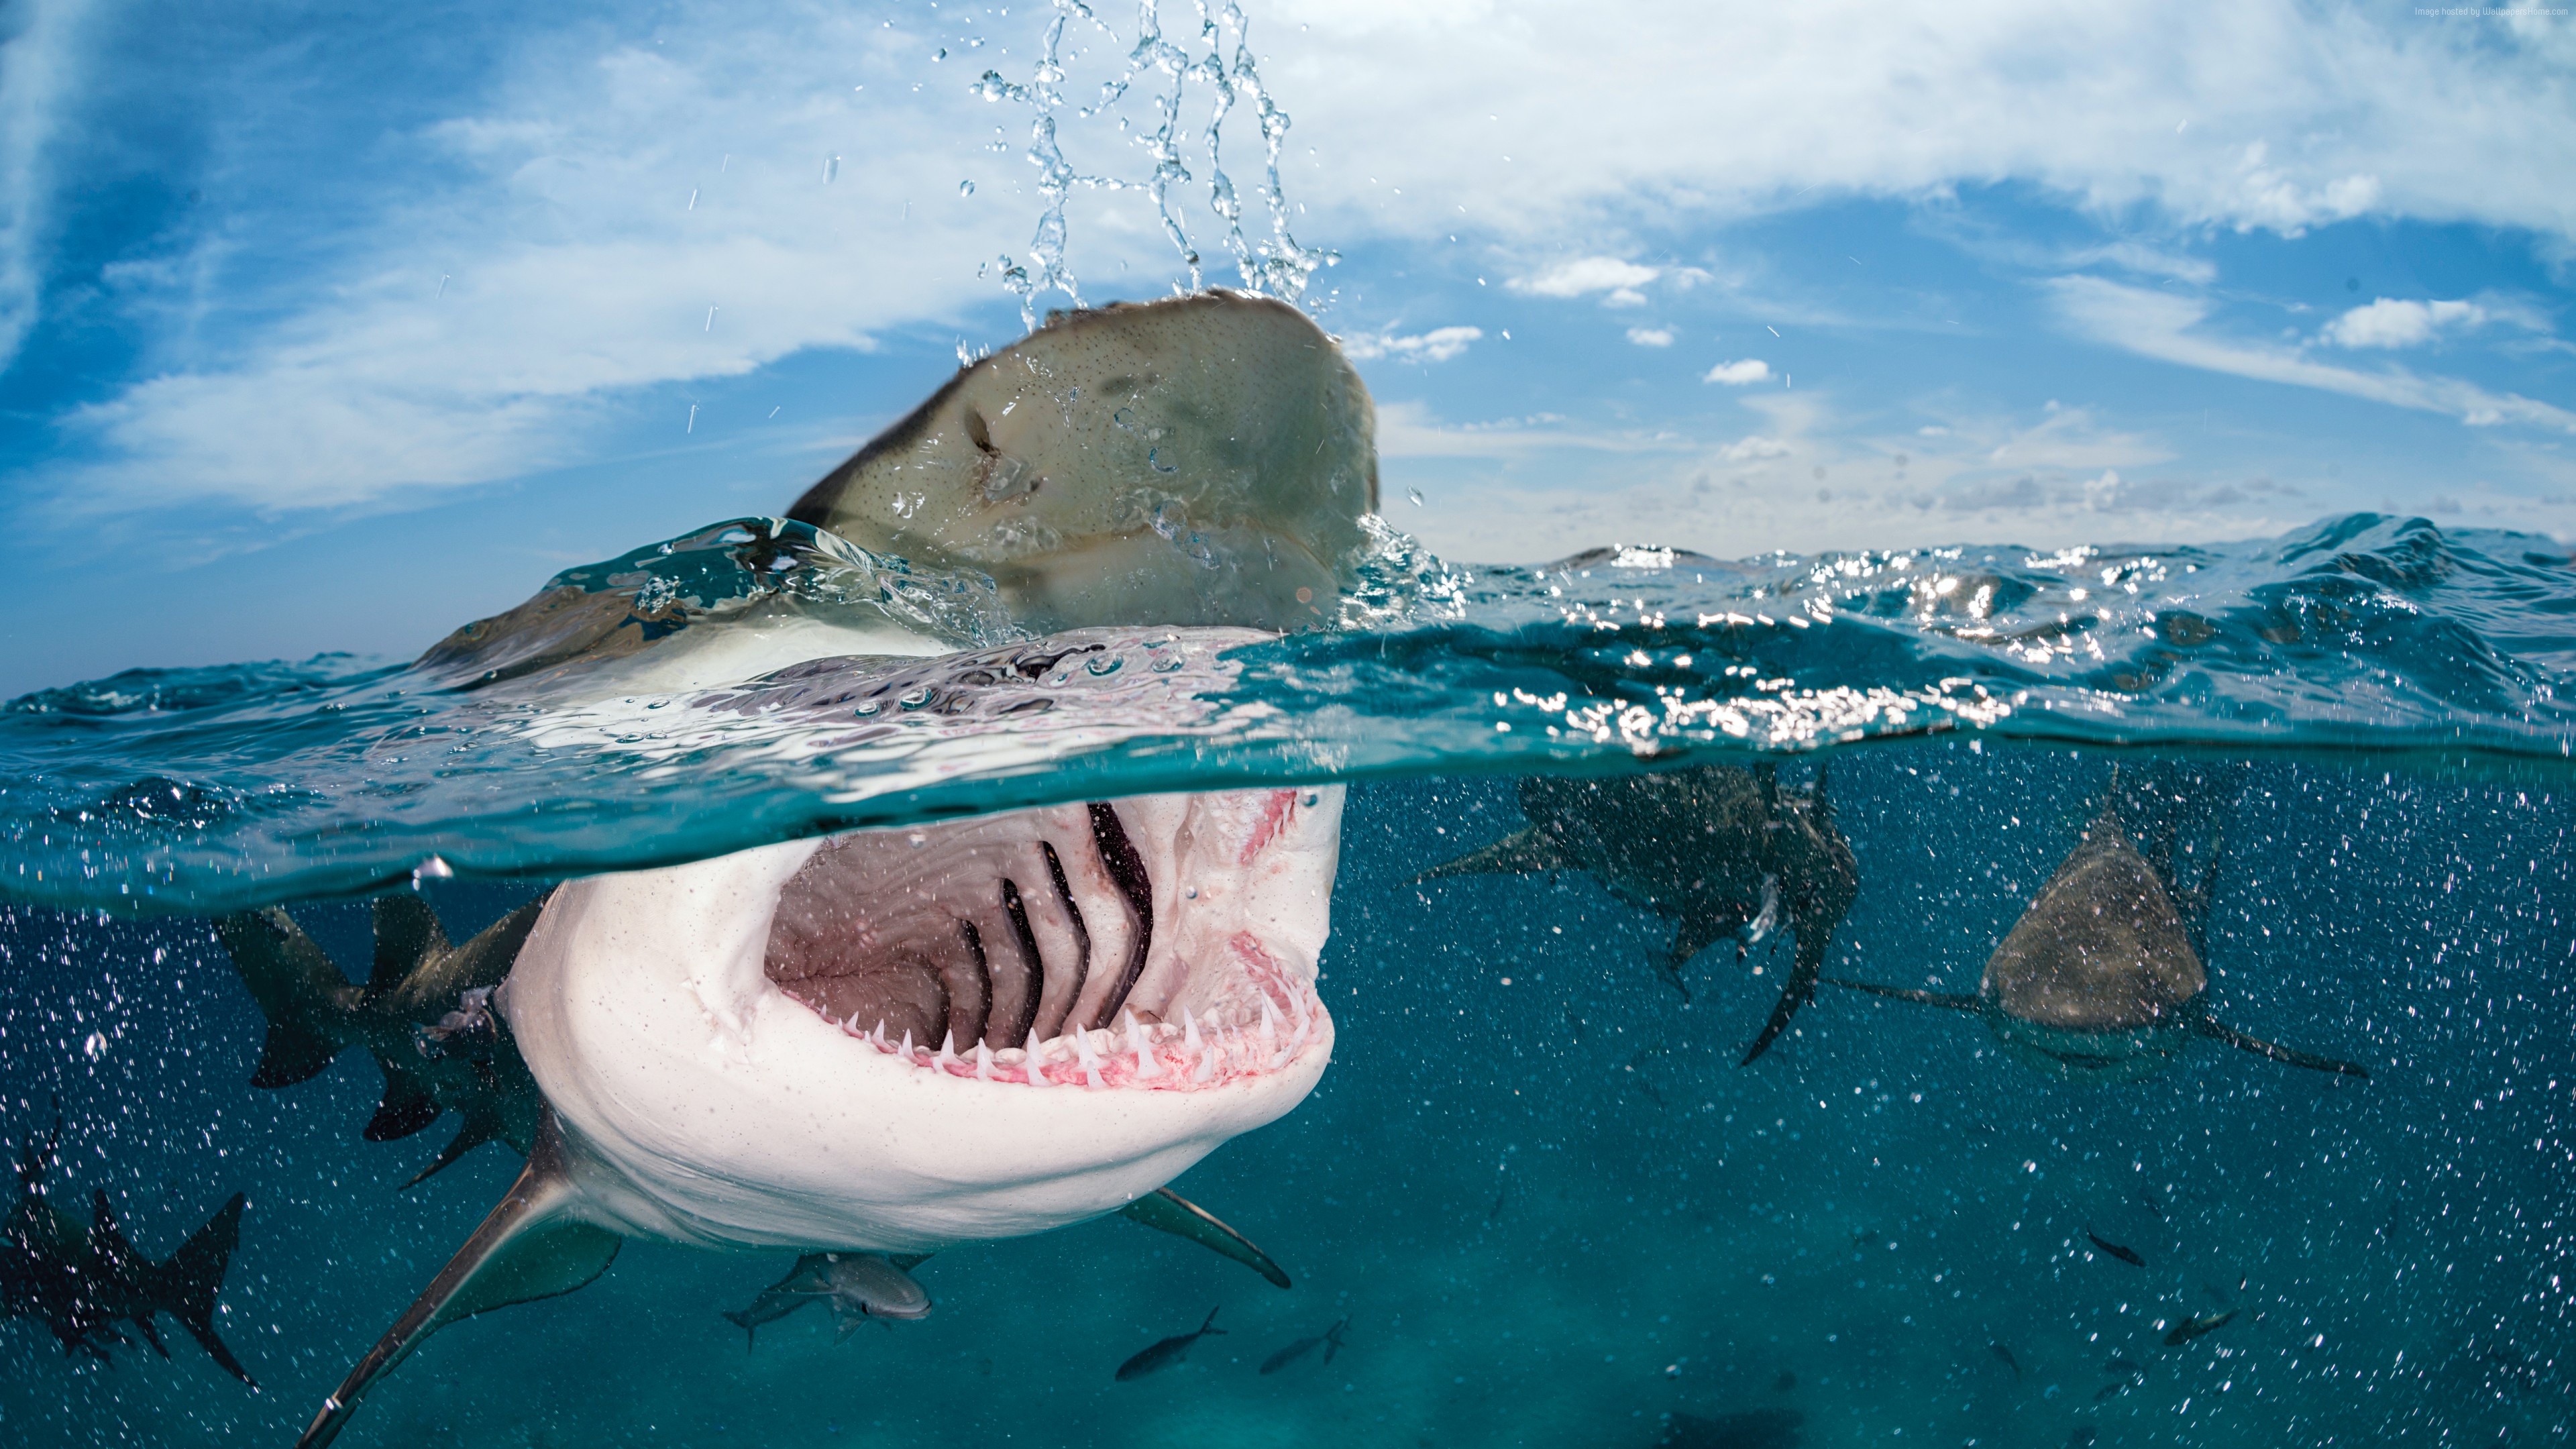 Wallpaper Shark, 5k, 4k wallpaper, 8k, Indian, Caribbean, Atlantic Ocean, sea, diving, water, splash, sky, clouds, unerwater, jaws, blue, tourism, World&